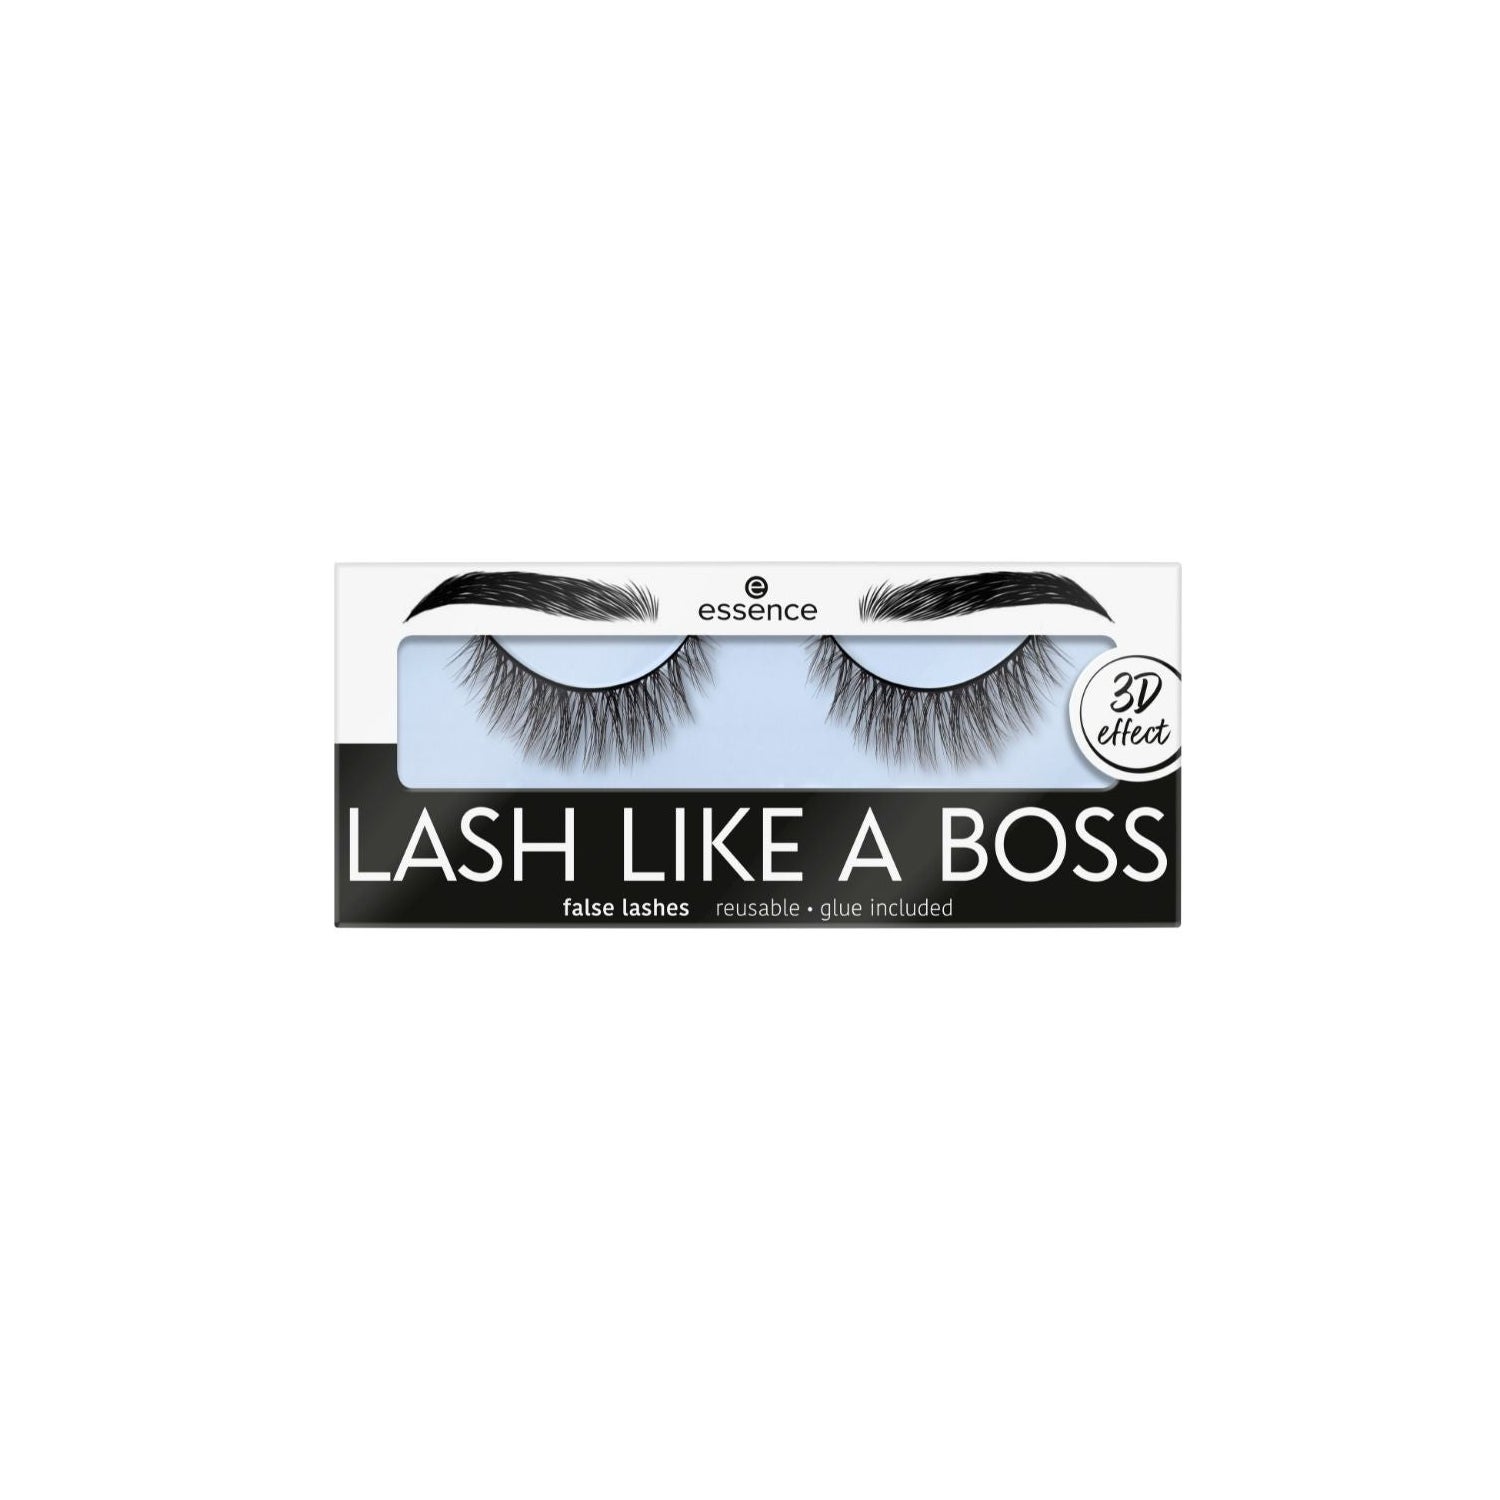 Irresistible Like Essence Lash False Par 1 Lashes A | Boss 06 PromoFarma